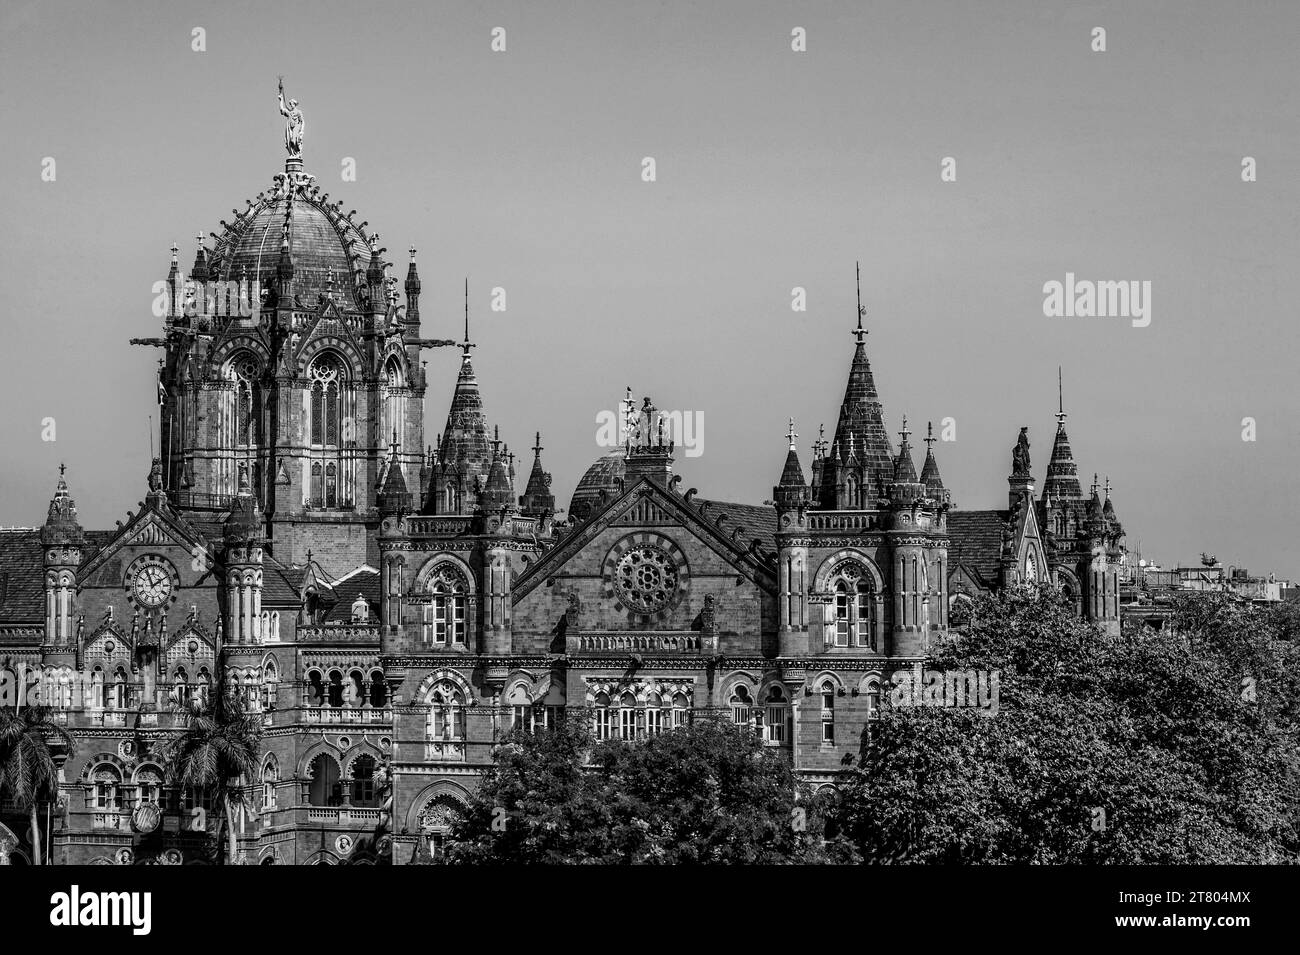 11 17 2012 Vintage Gothik Architecture Chhatrapati Shivaji Maharaj Terminus Railway Station, sito patrimonio dell'umanità dell'UNESCO Mumbai Maharashtra India. Foto Stock